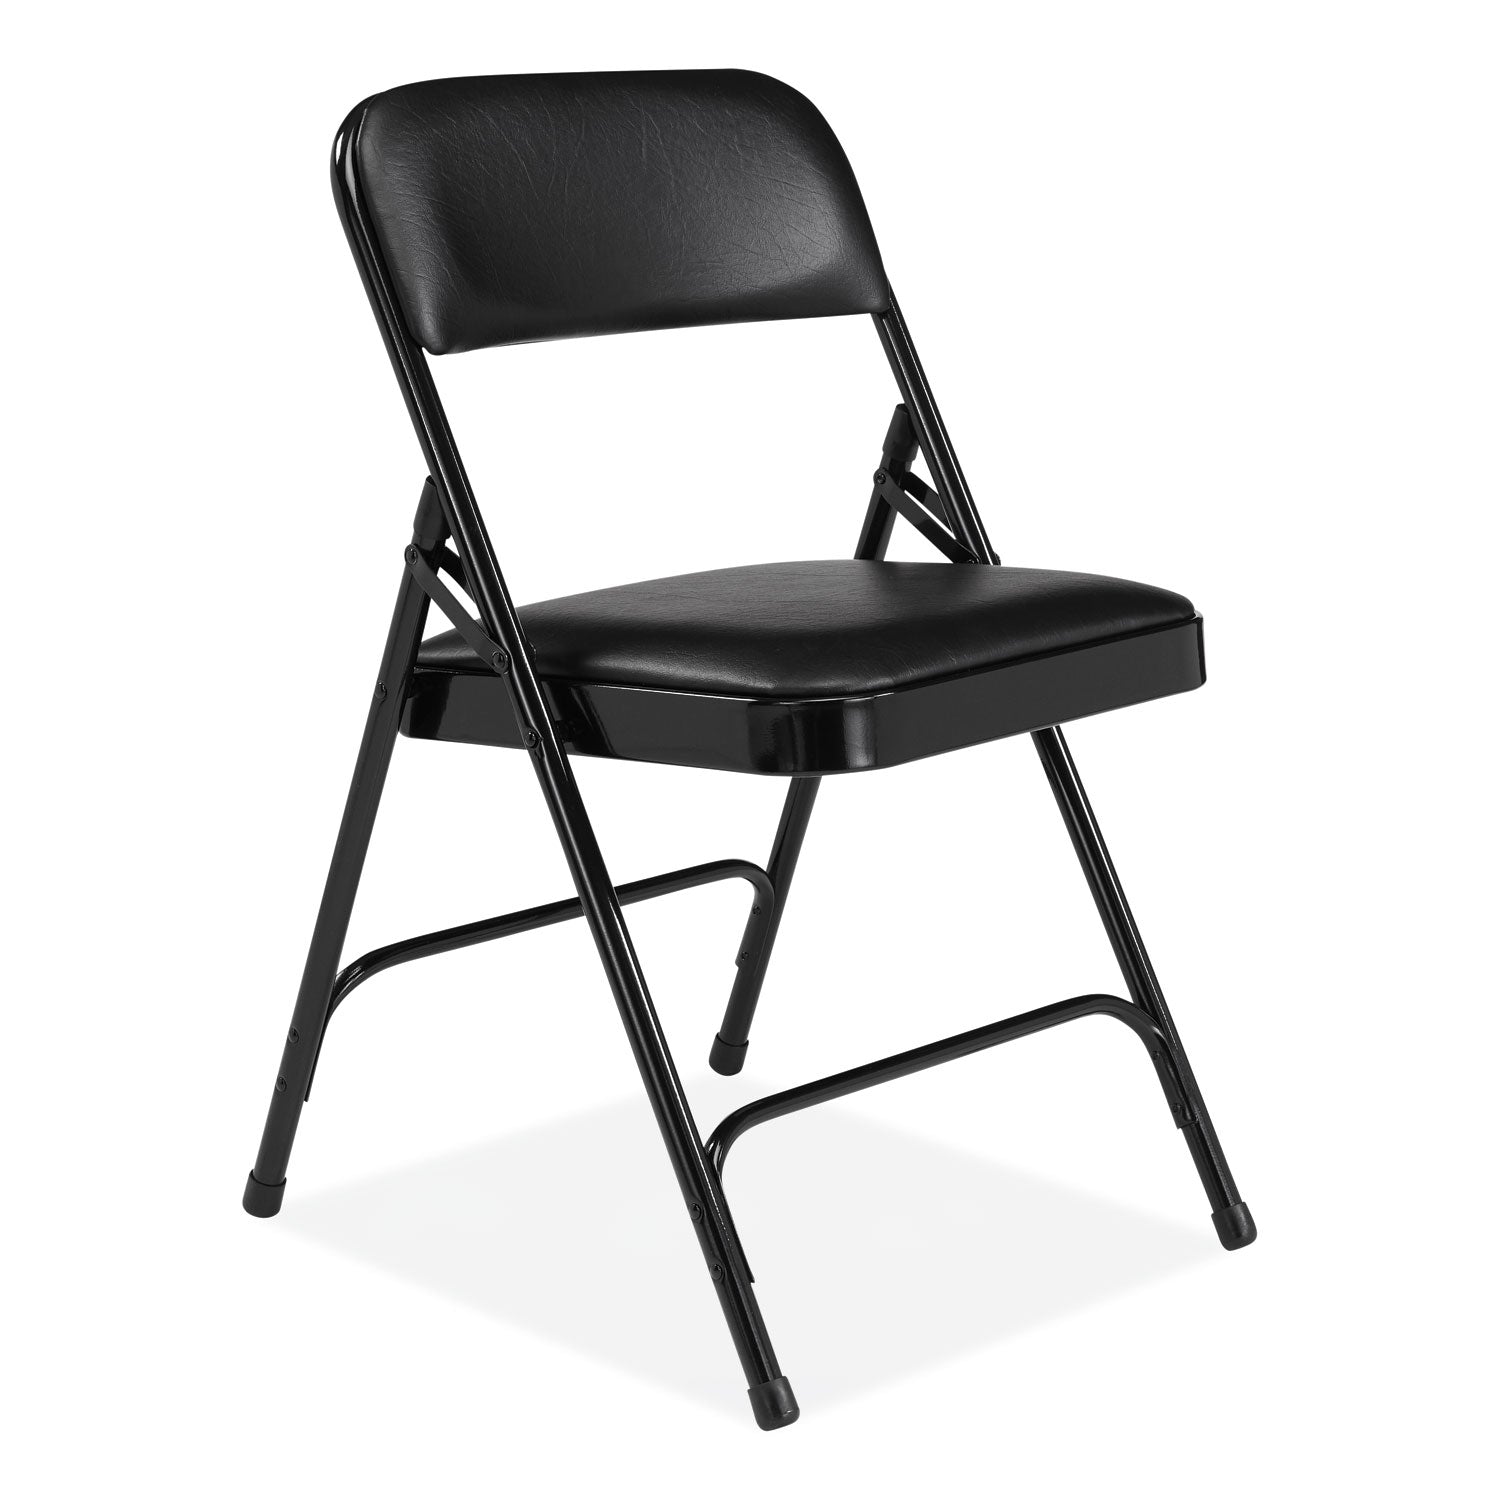 1200-series-premium-vinyl-dual-hinge-folding-chair-supports-500-lb-1775-seat-ht-caviar-black-4-ctships-in-1-3-bus-days_nps1210 - 2